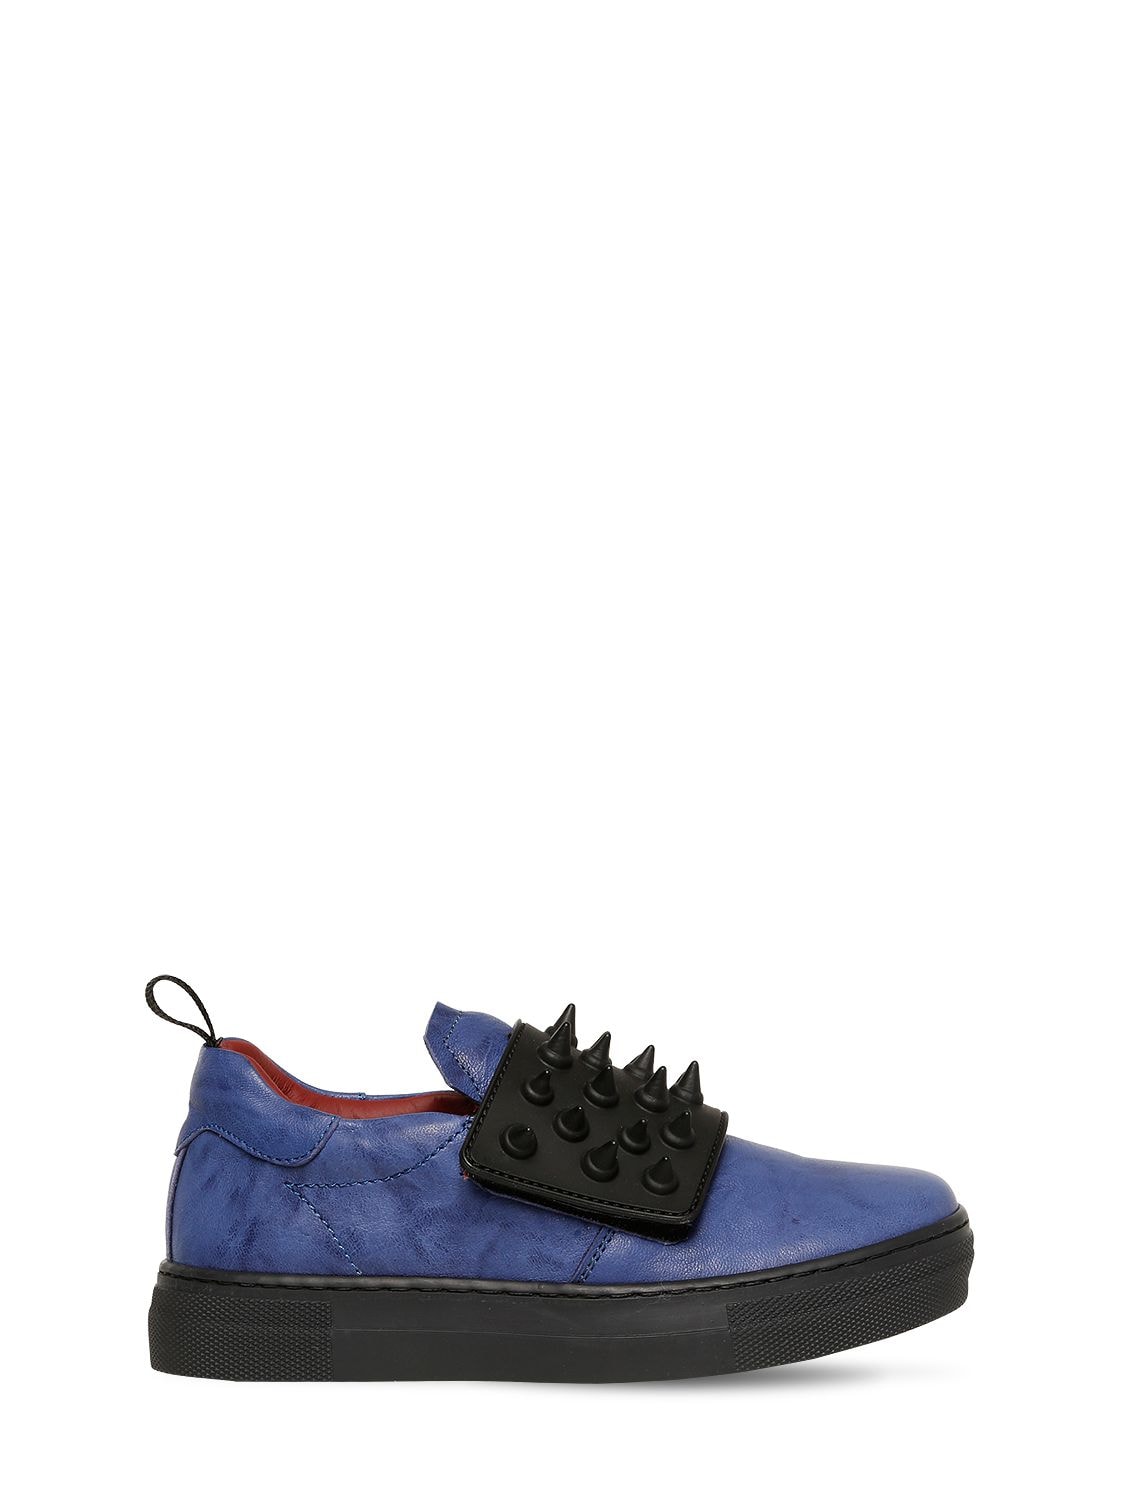 Am 66 - Spiked leather slip-on sneakers - Blue/Black | Luisaviaroma